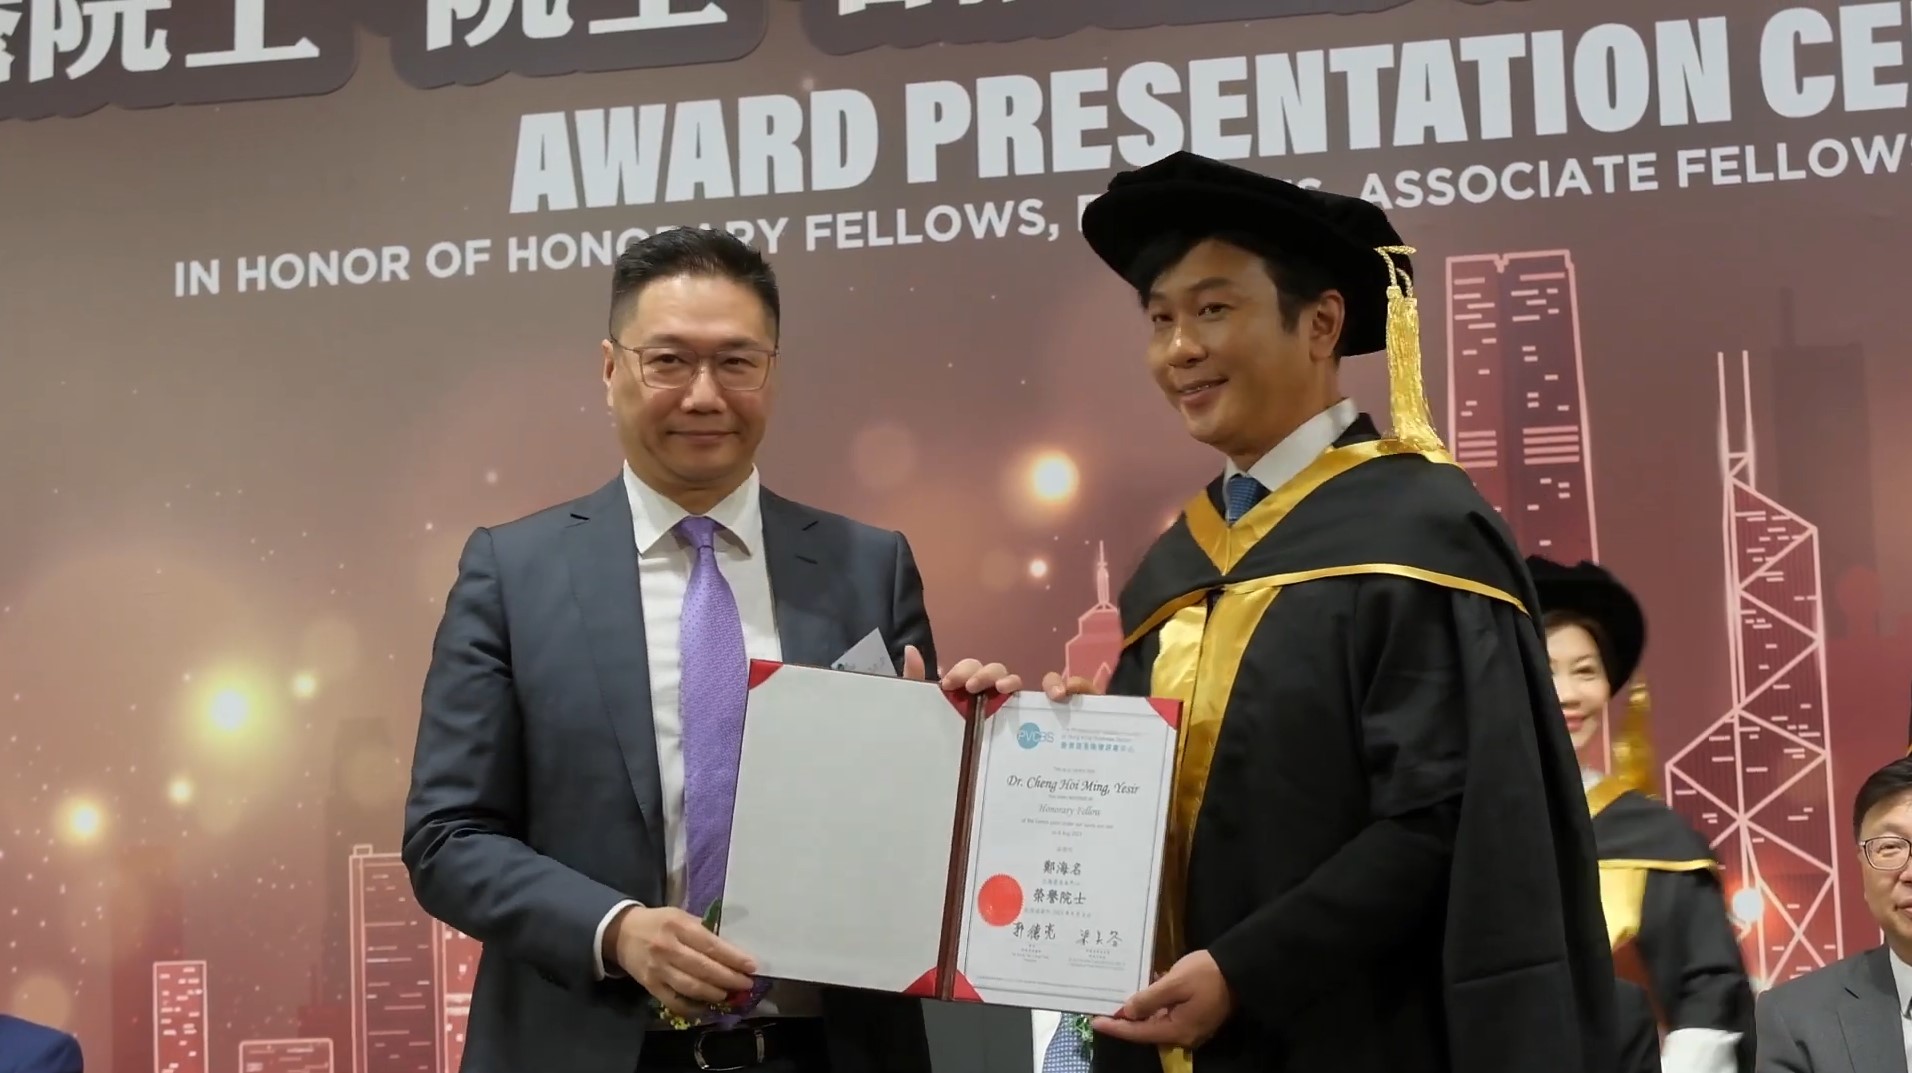 Yesir 榮獲香港商業專業評審中心的榮譽院士資歷，彰顯行業領先地位！